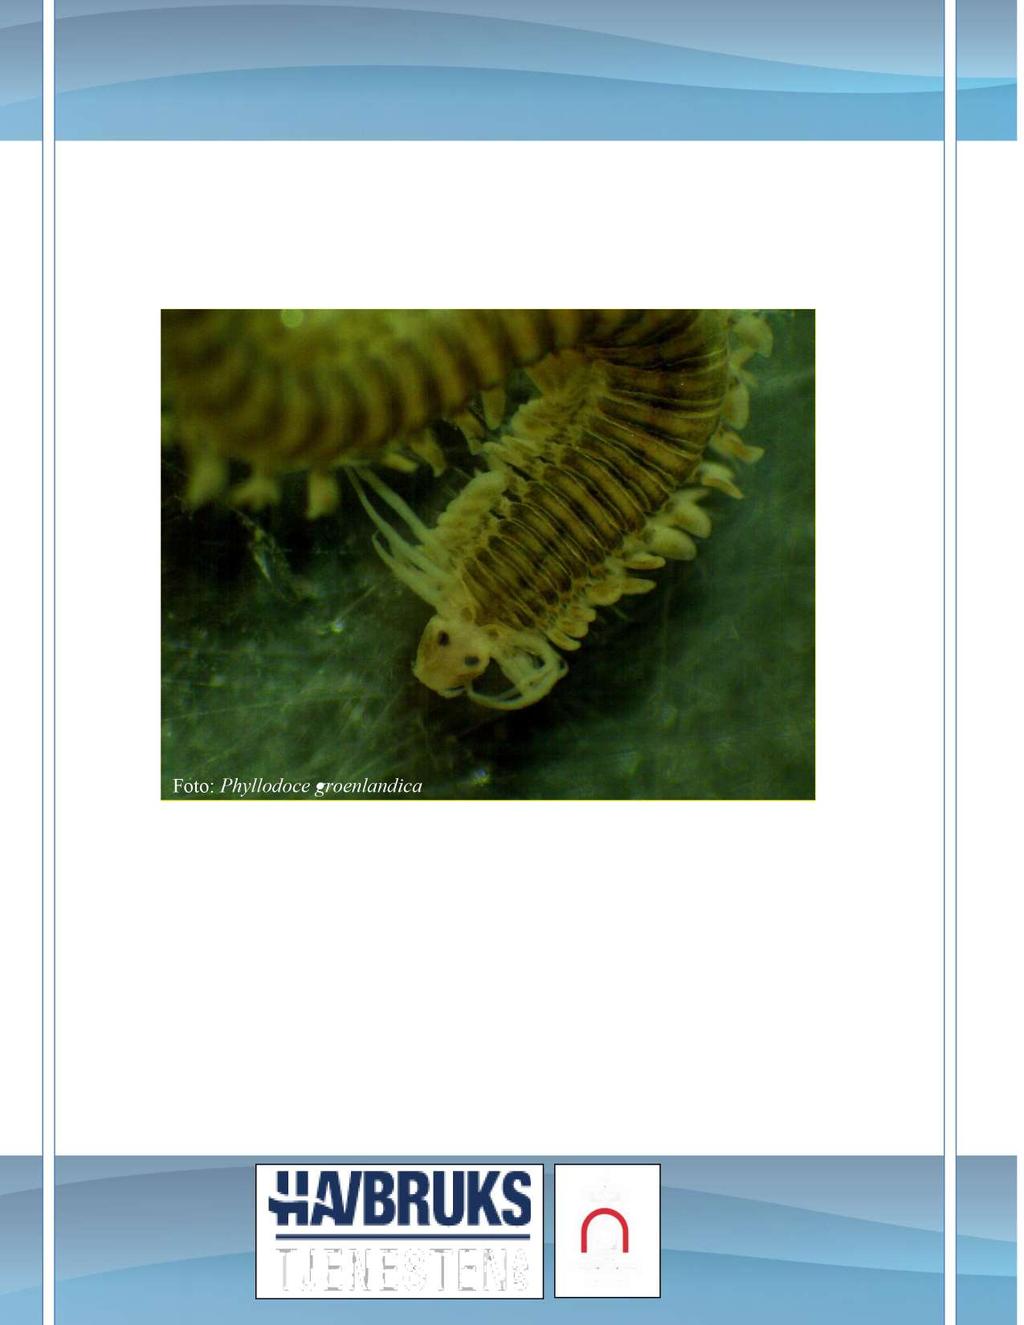 Bløtbunns faunaundersøkelse NS - EN ISO 16665 :2013 Foto: Phyllodoce groenlandica L